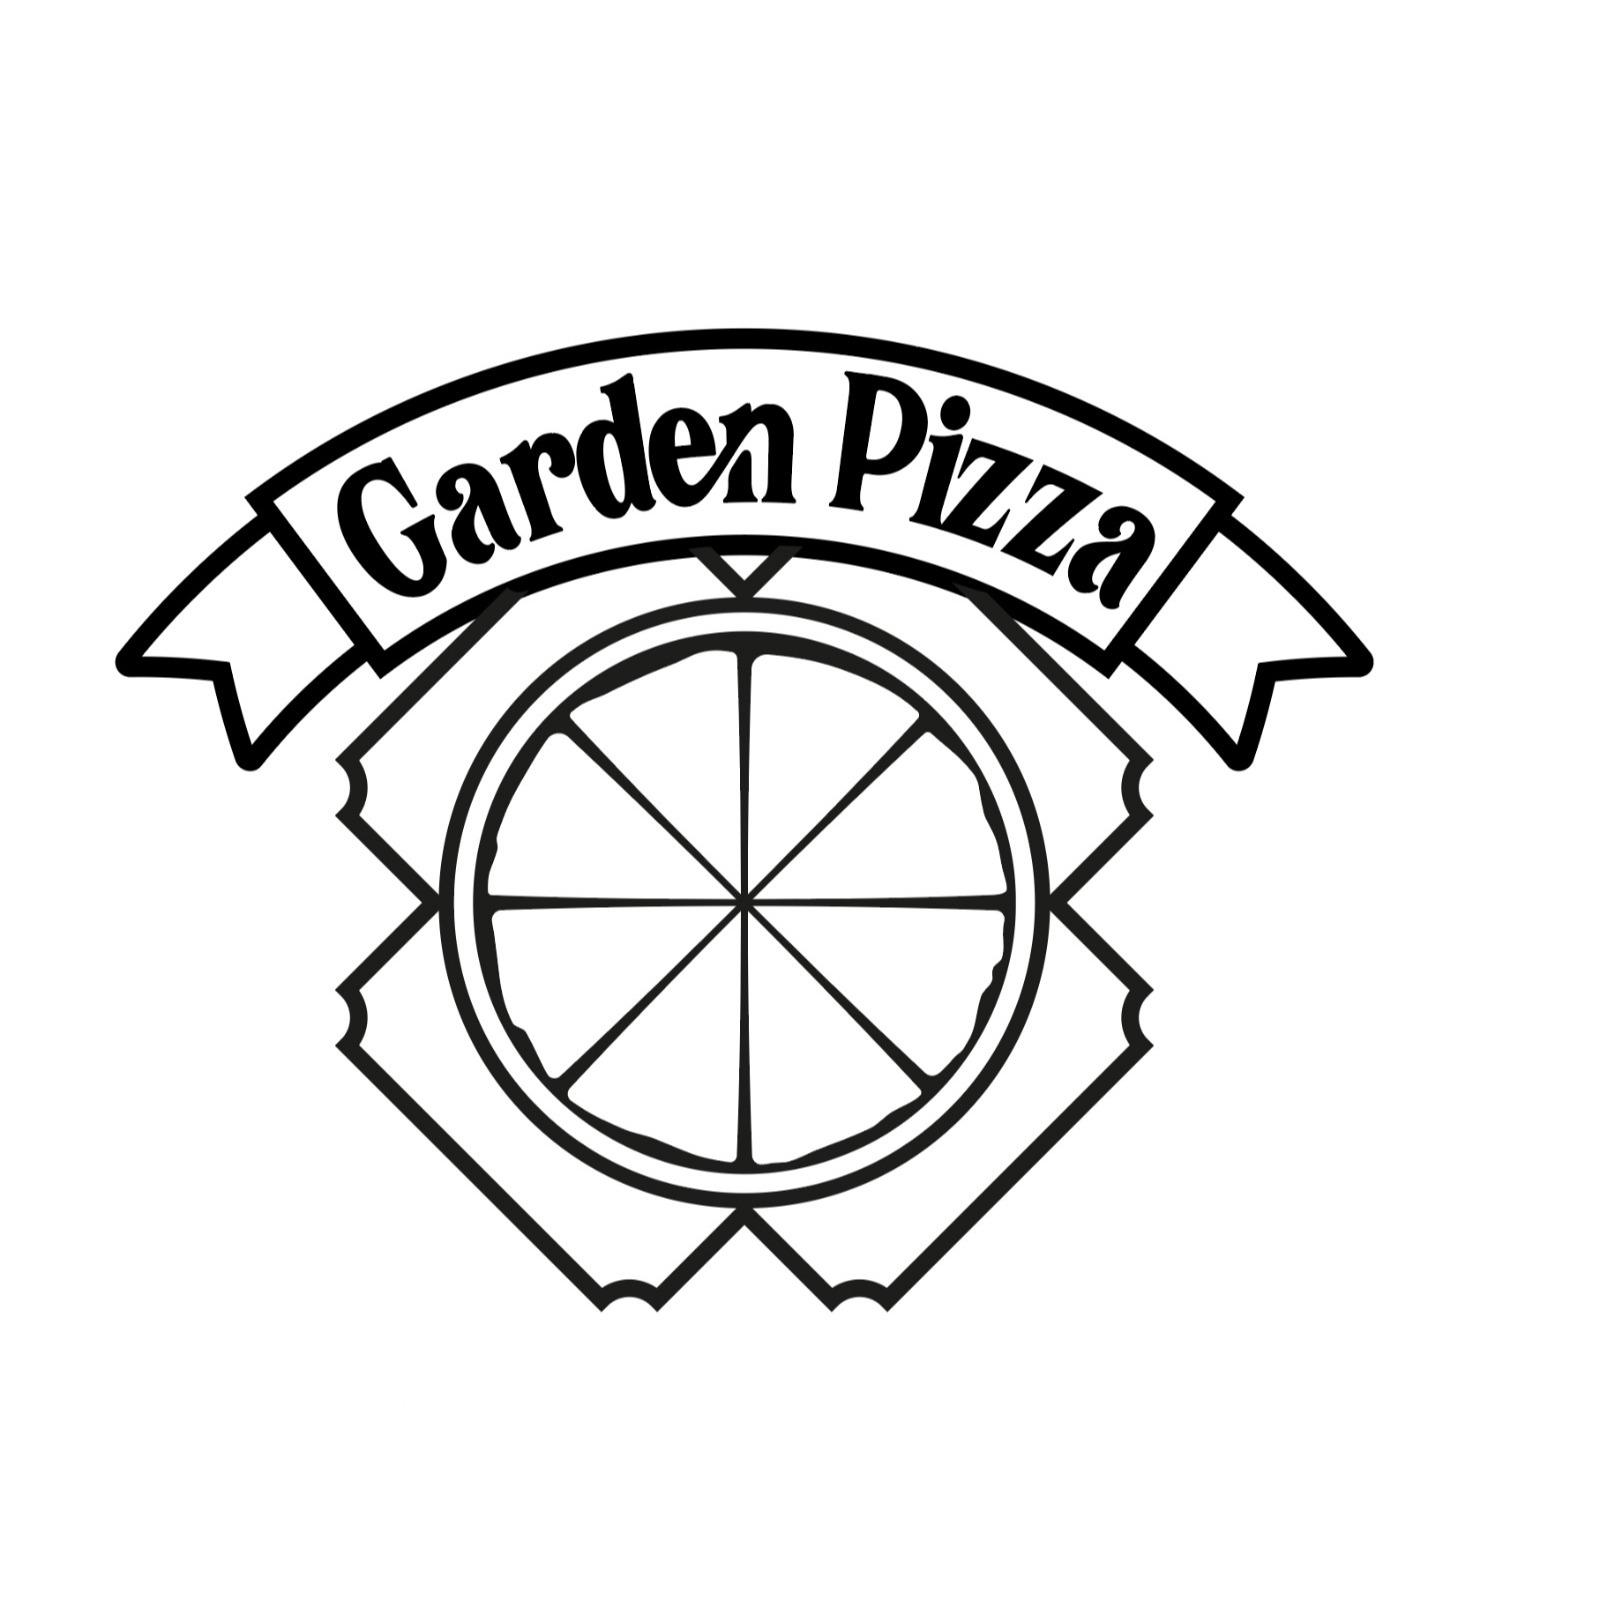 Garden Pizza in Herne - Logo